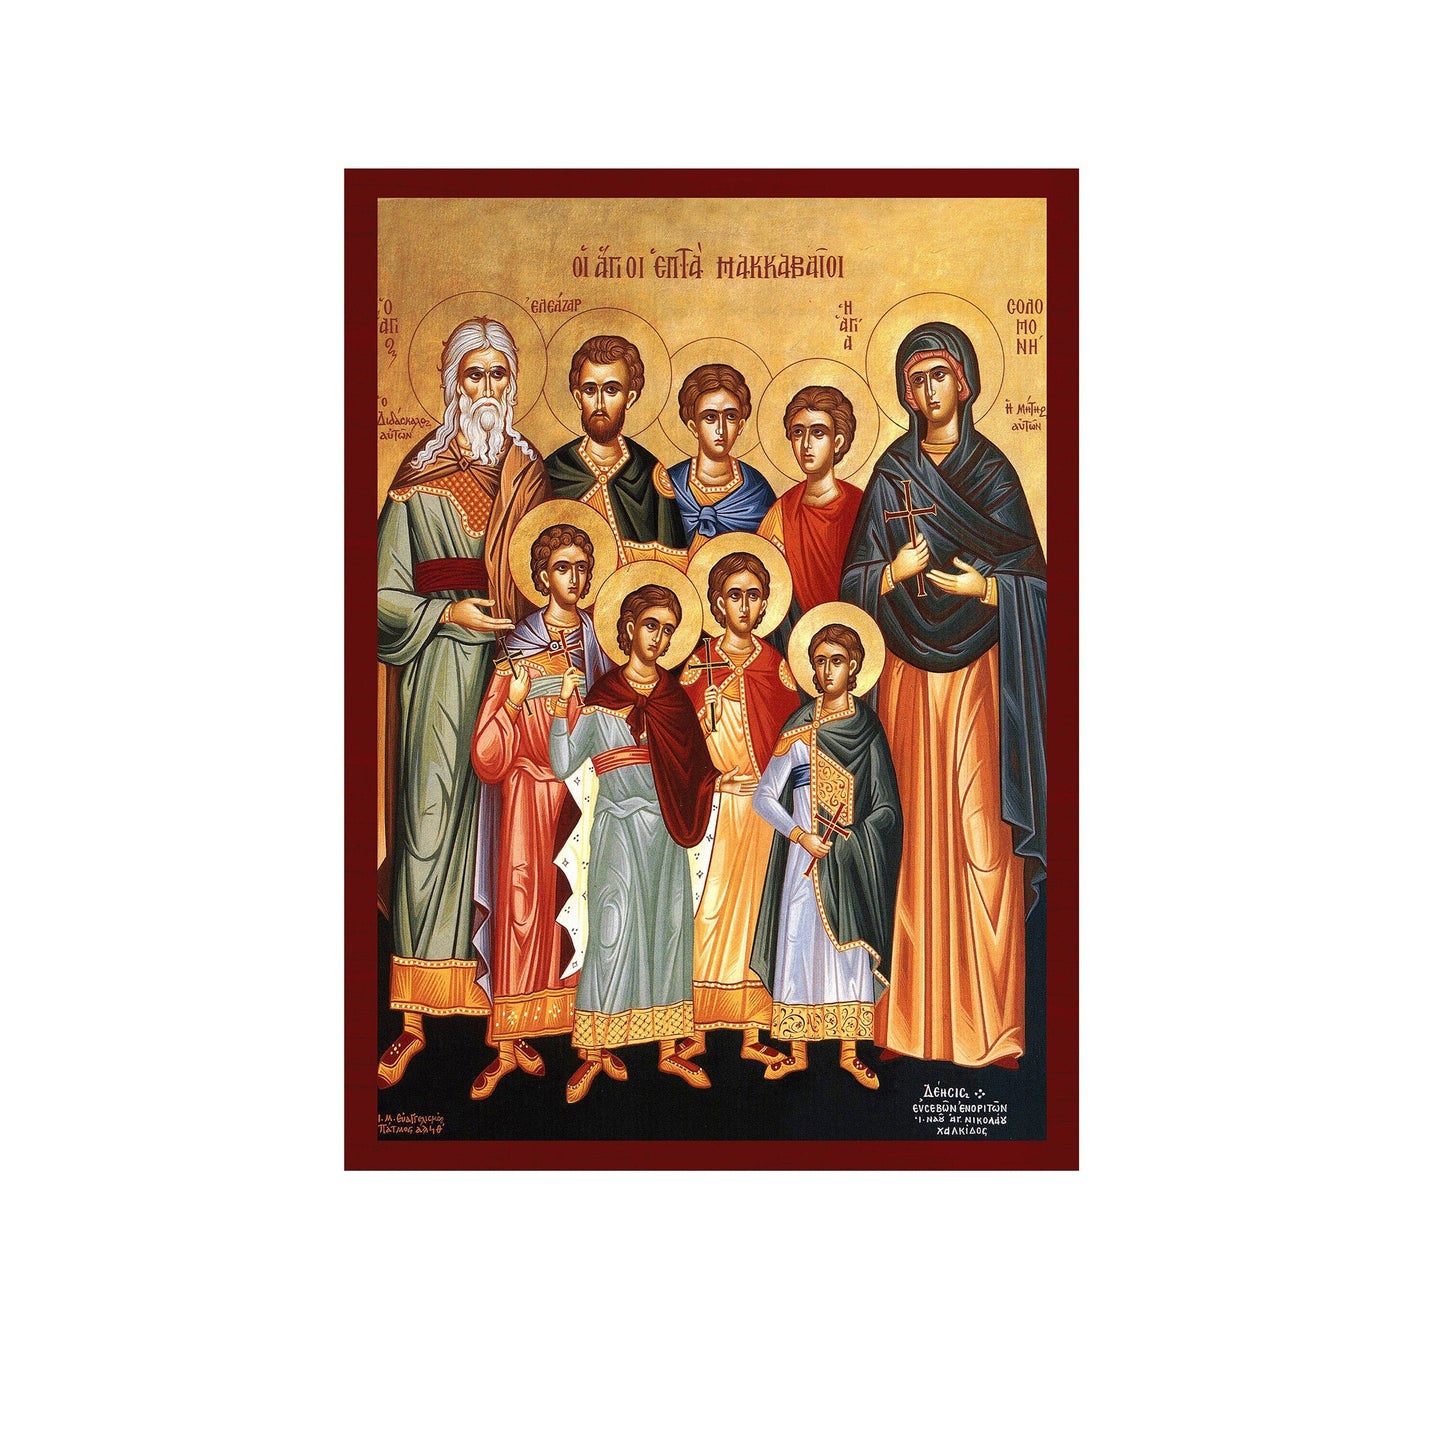 Saint 7 Maccabee icon, Handmade Greek Orthodox icon of St Maccabee Martyrs, Byzantine art wall hanging icon wood plaque, religious decor TheHolyArt